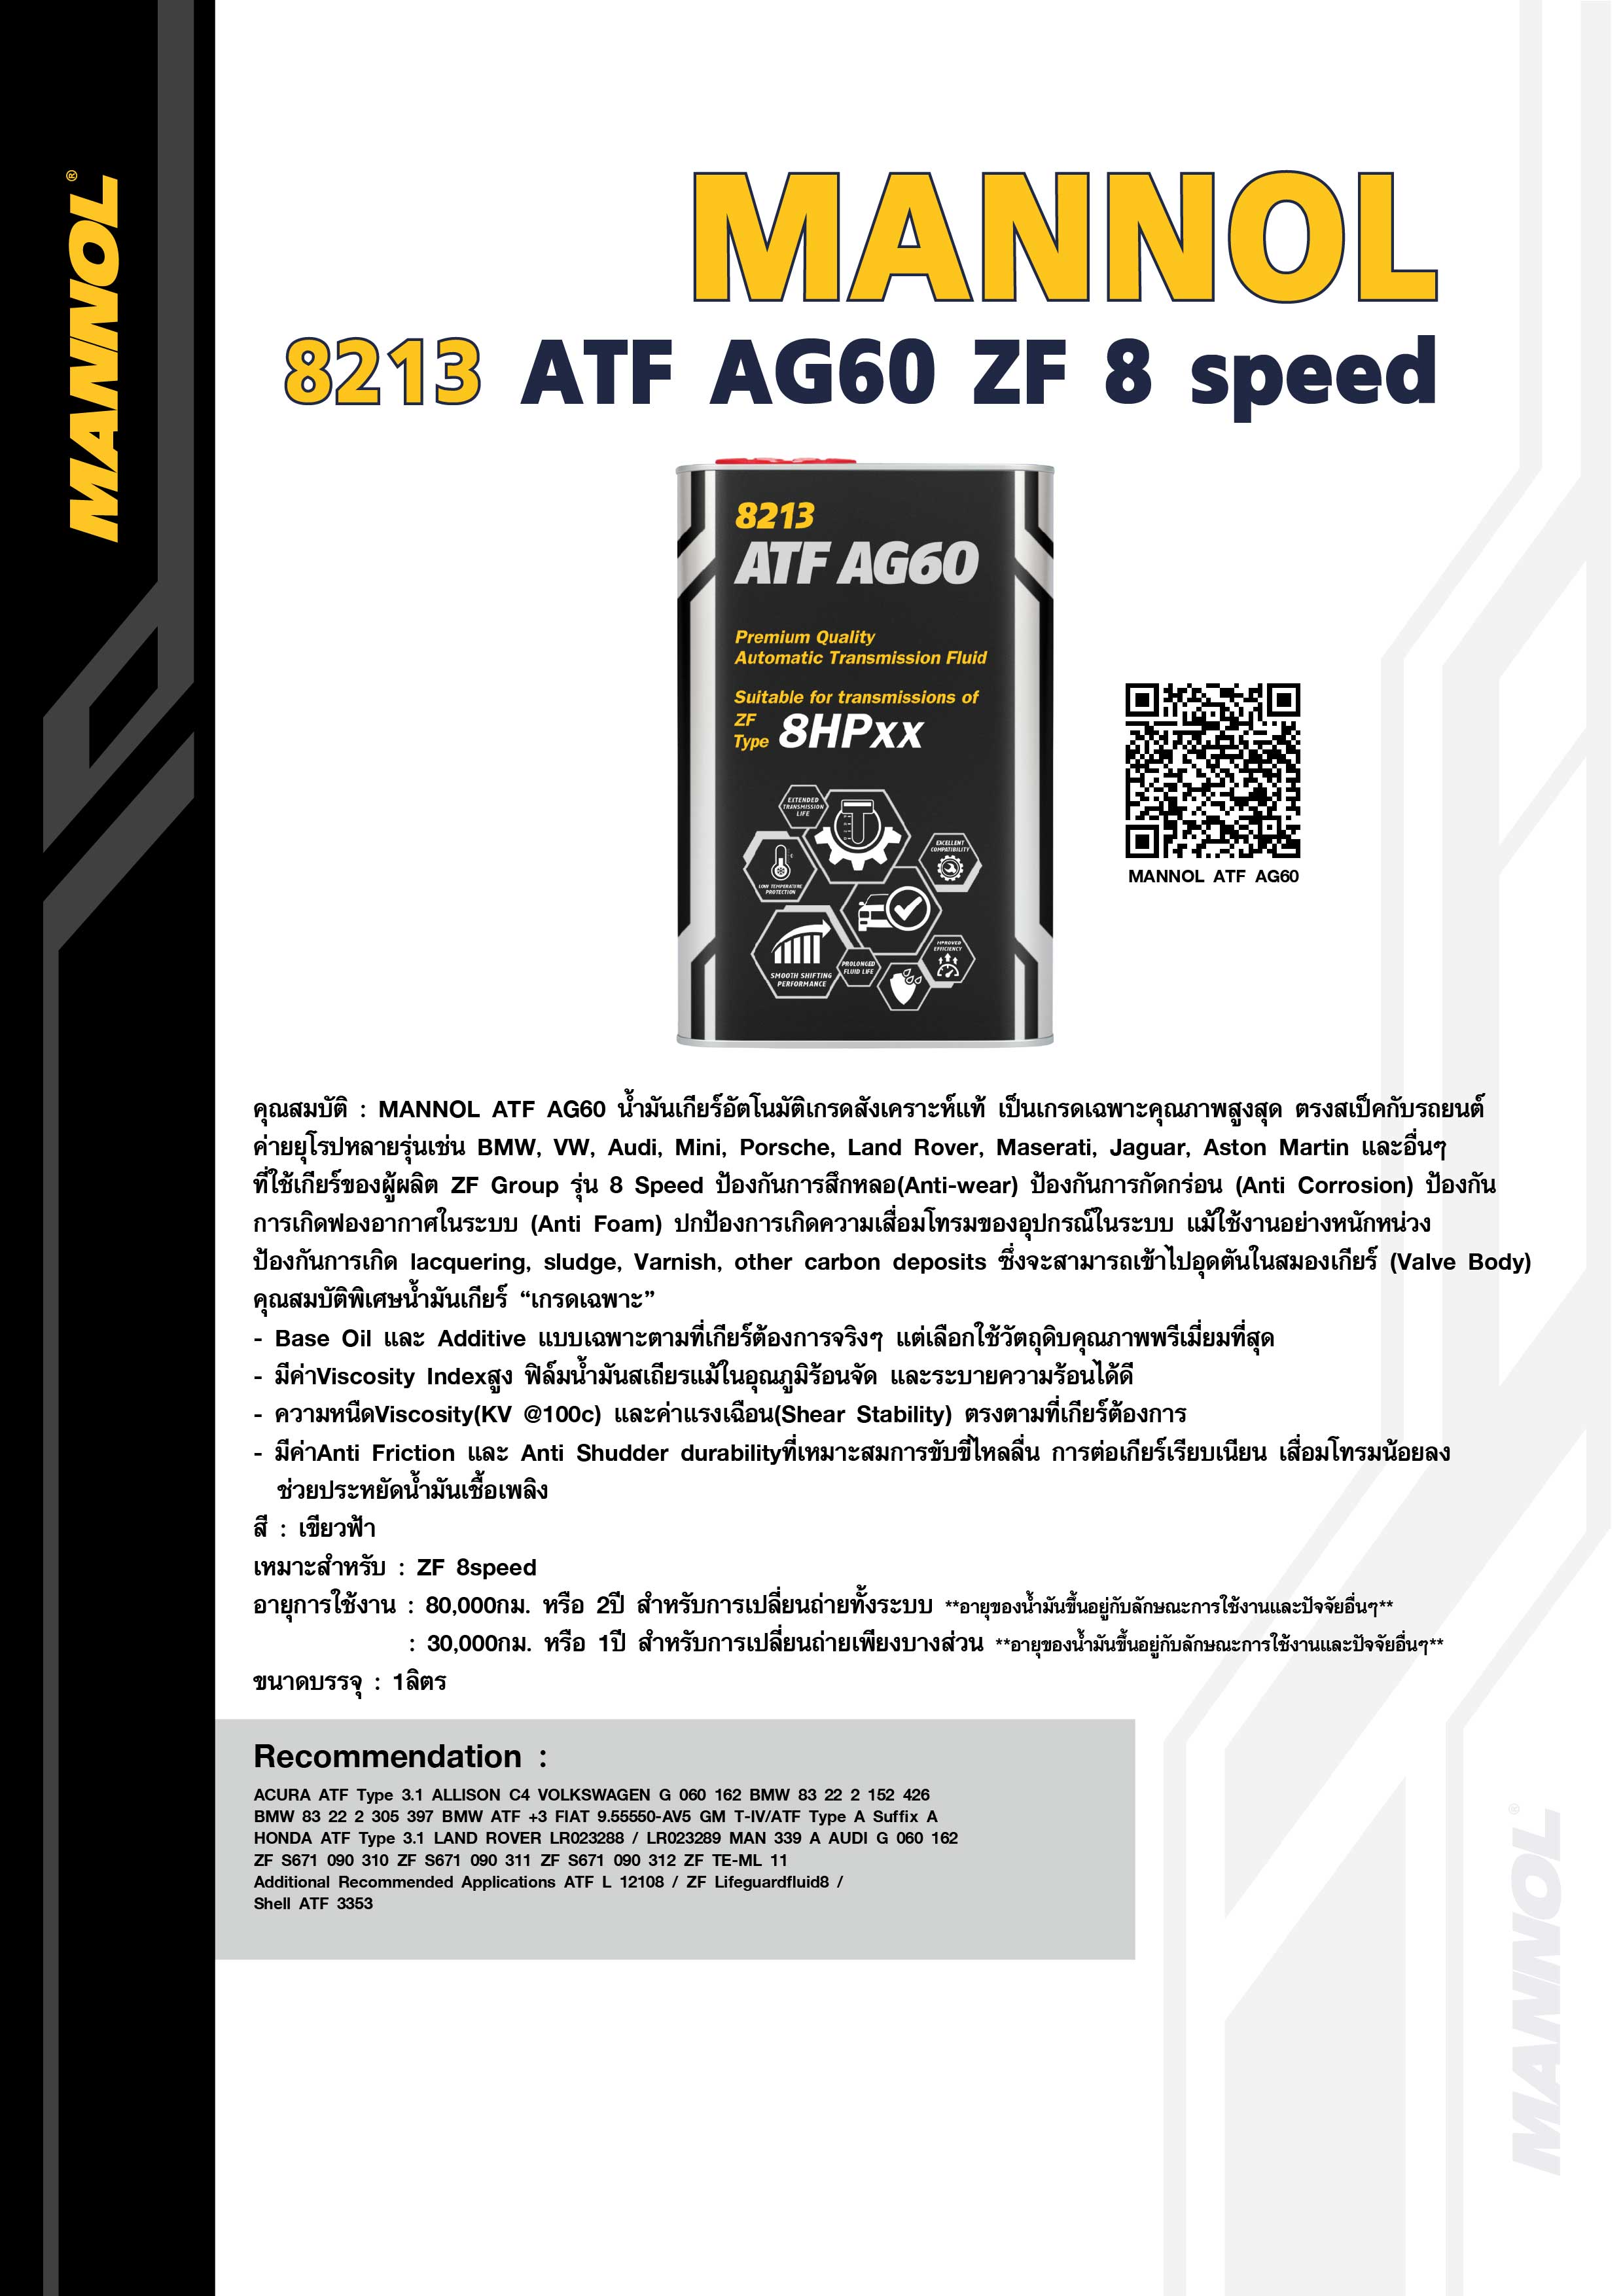 Mannol 8213 ATF AG60 ZF 8 speed